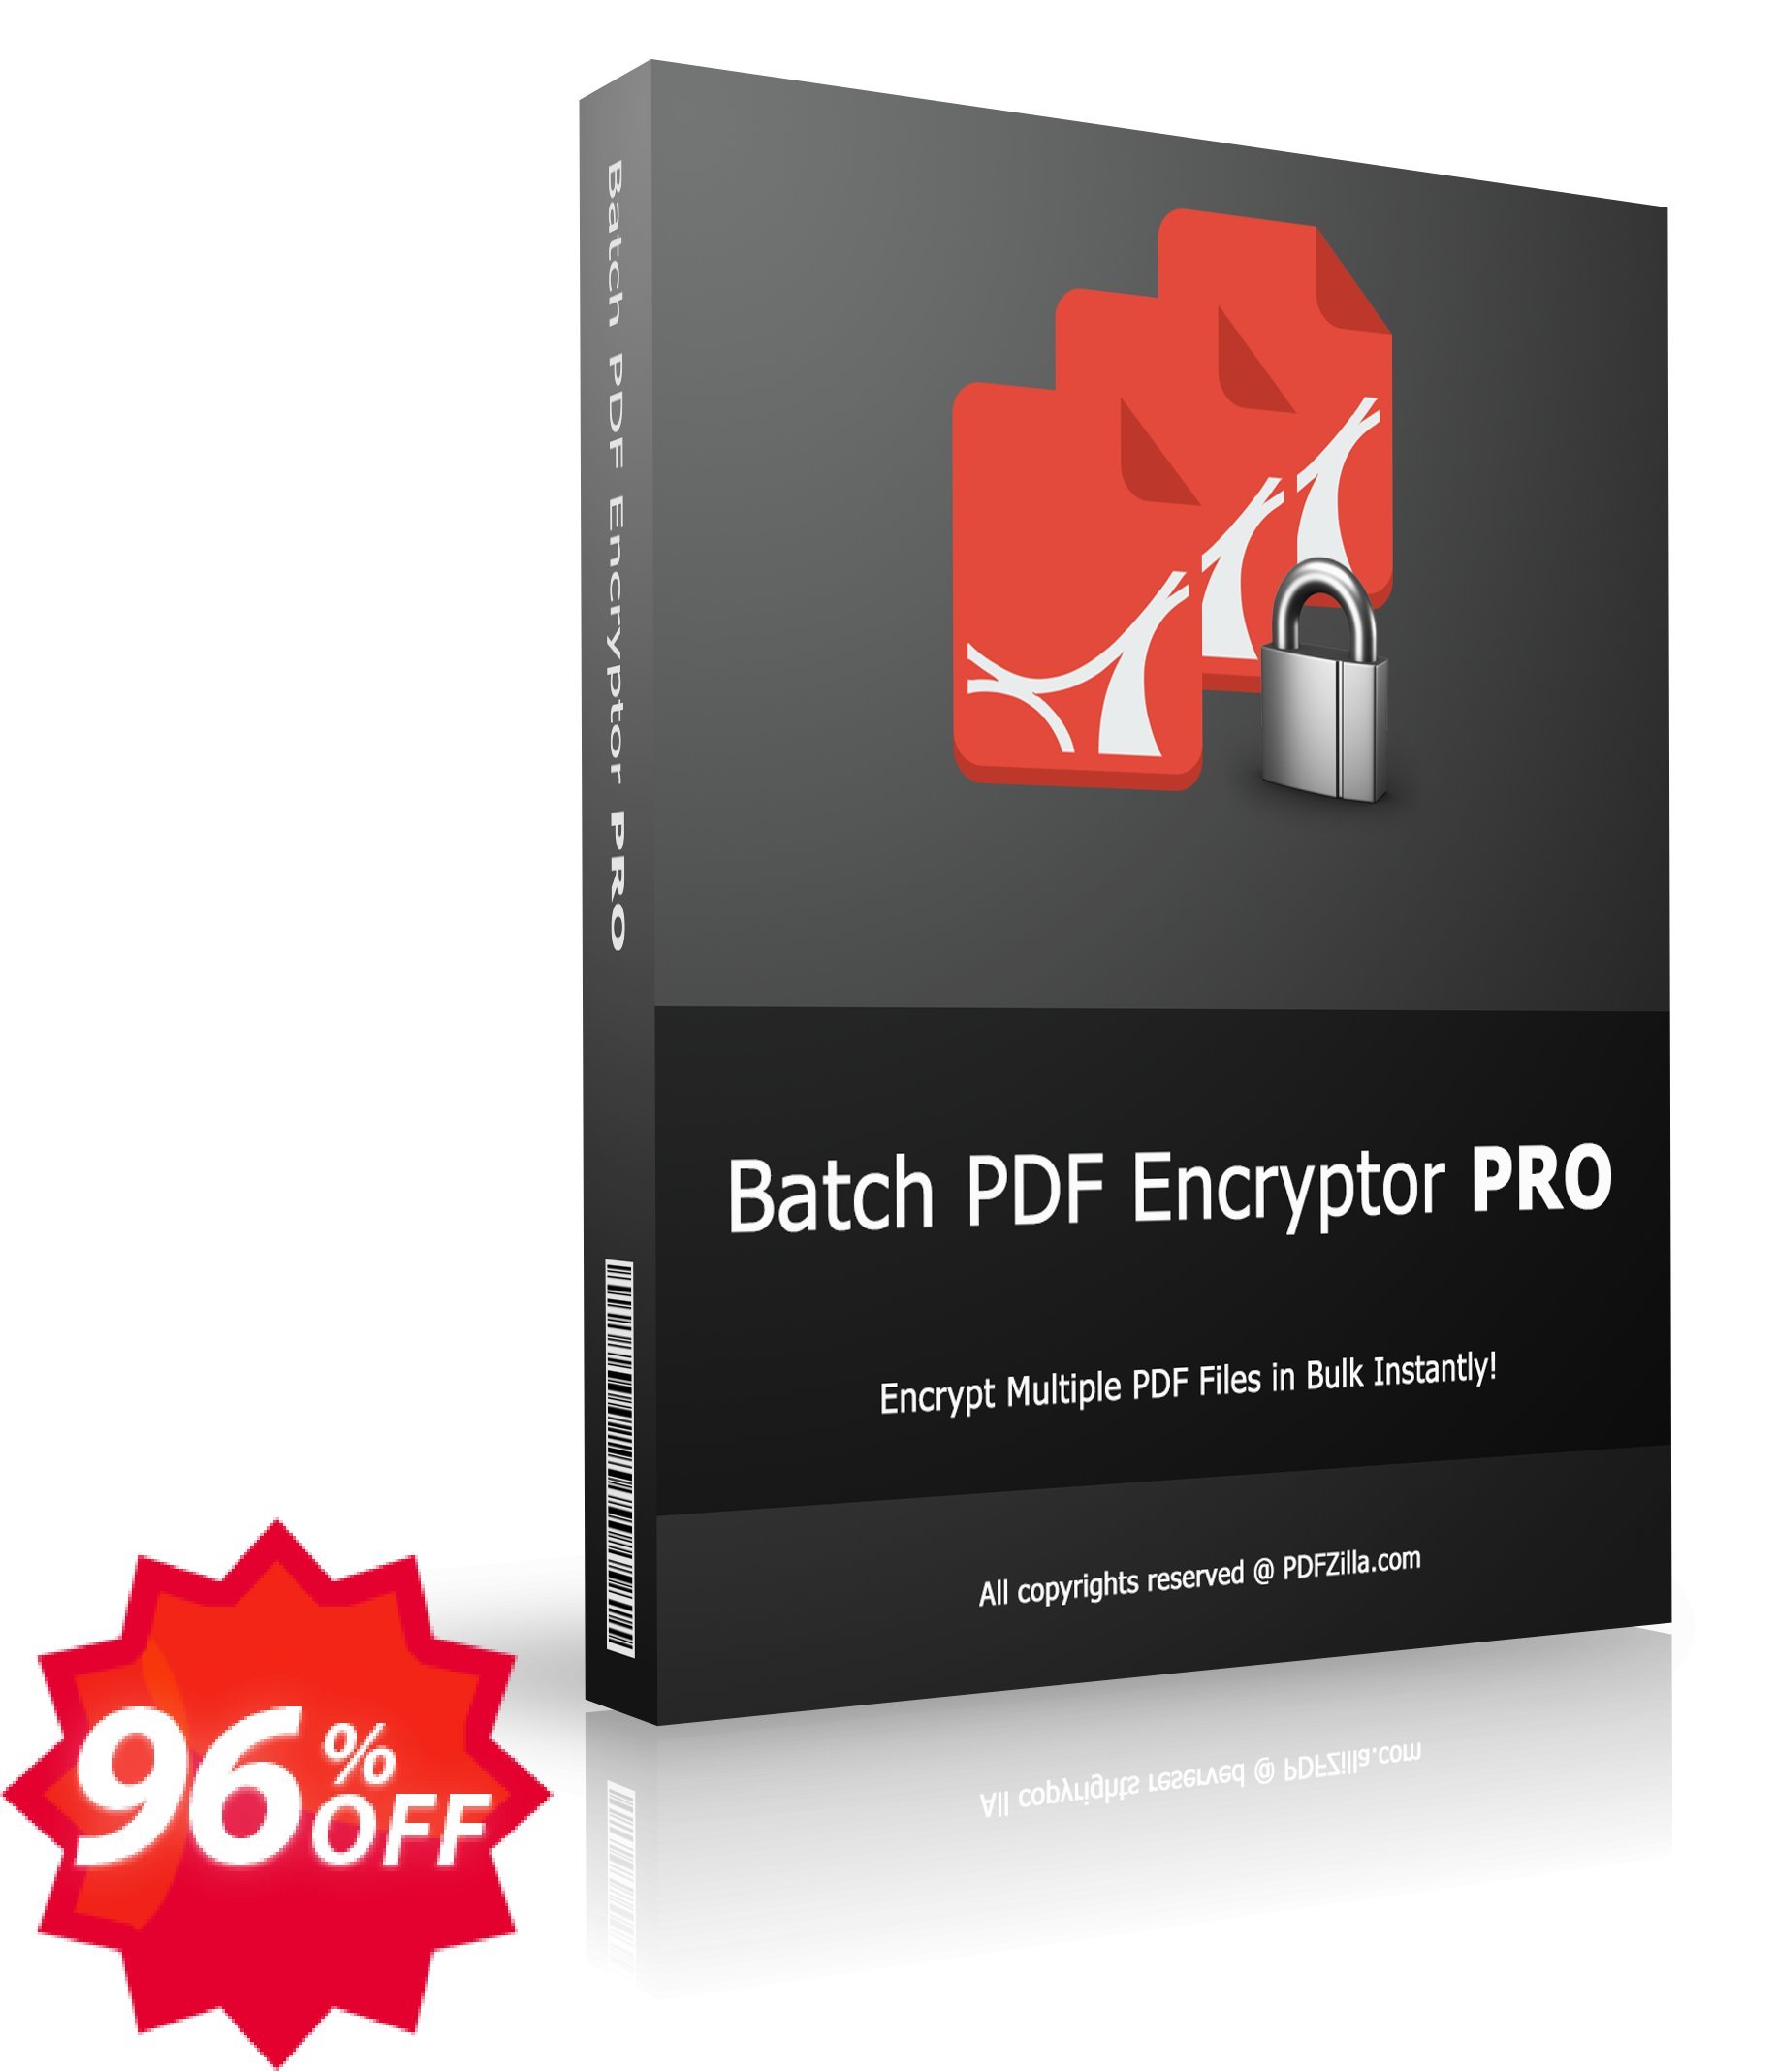 PDFzilla Batch PDF Encryptor PRO Coupon code 96% discount 